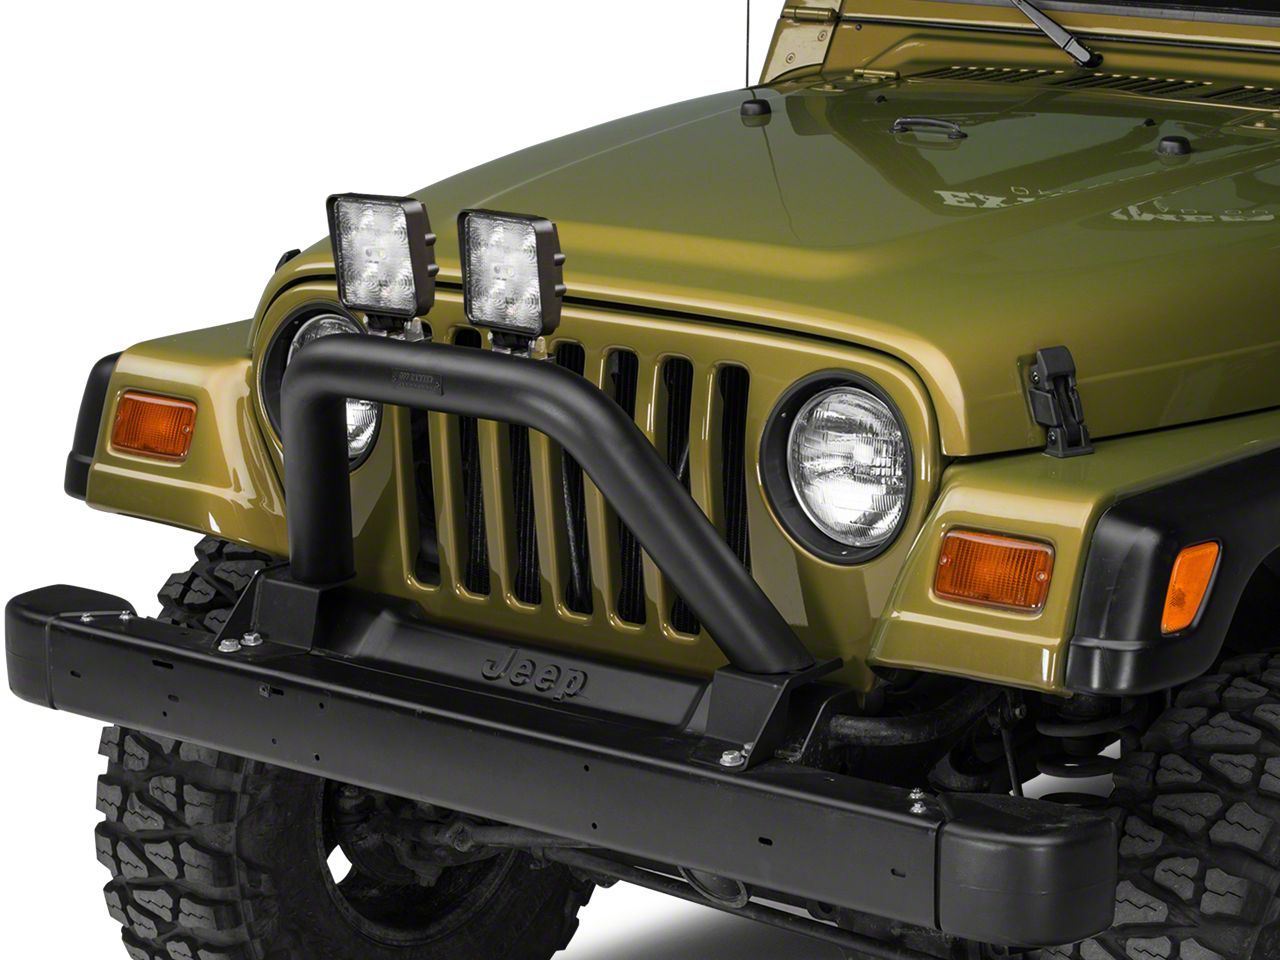 1989 Jeep Wrangler YJ Accessories & Parts | ExtremeTerrain